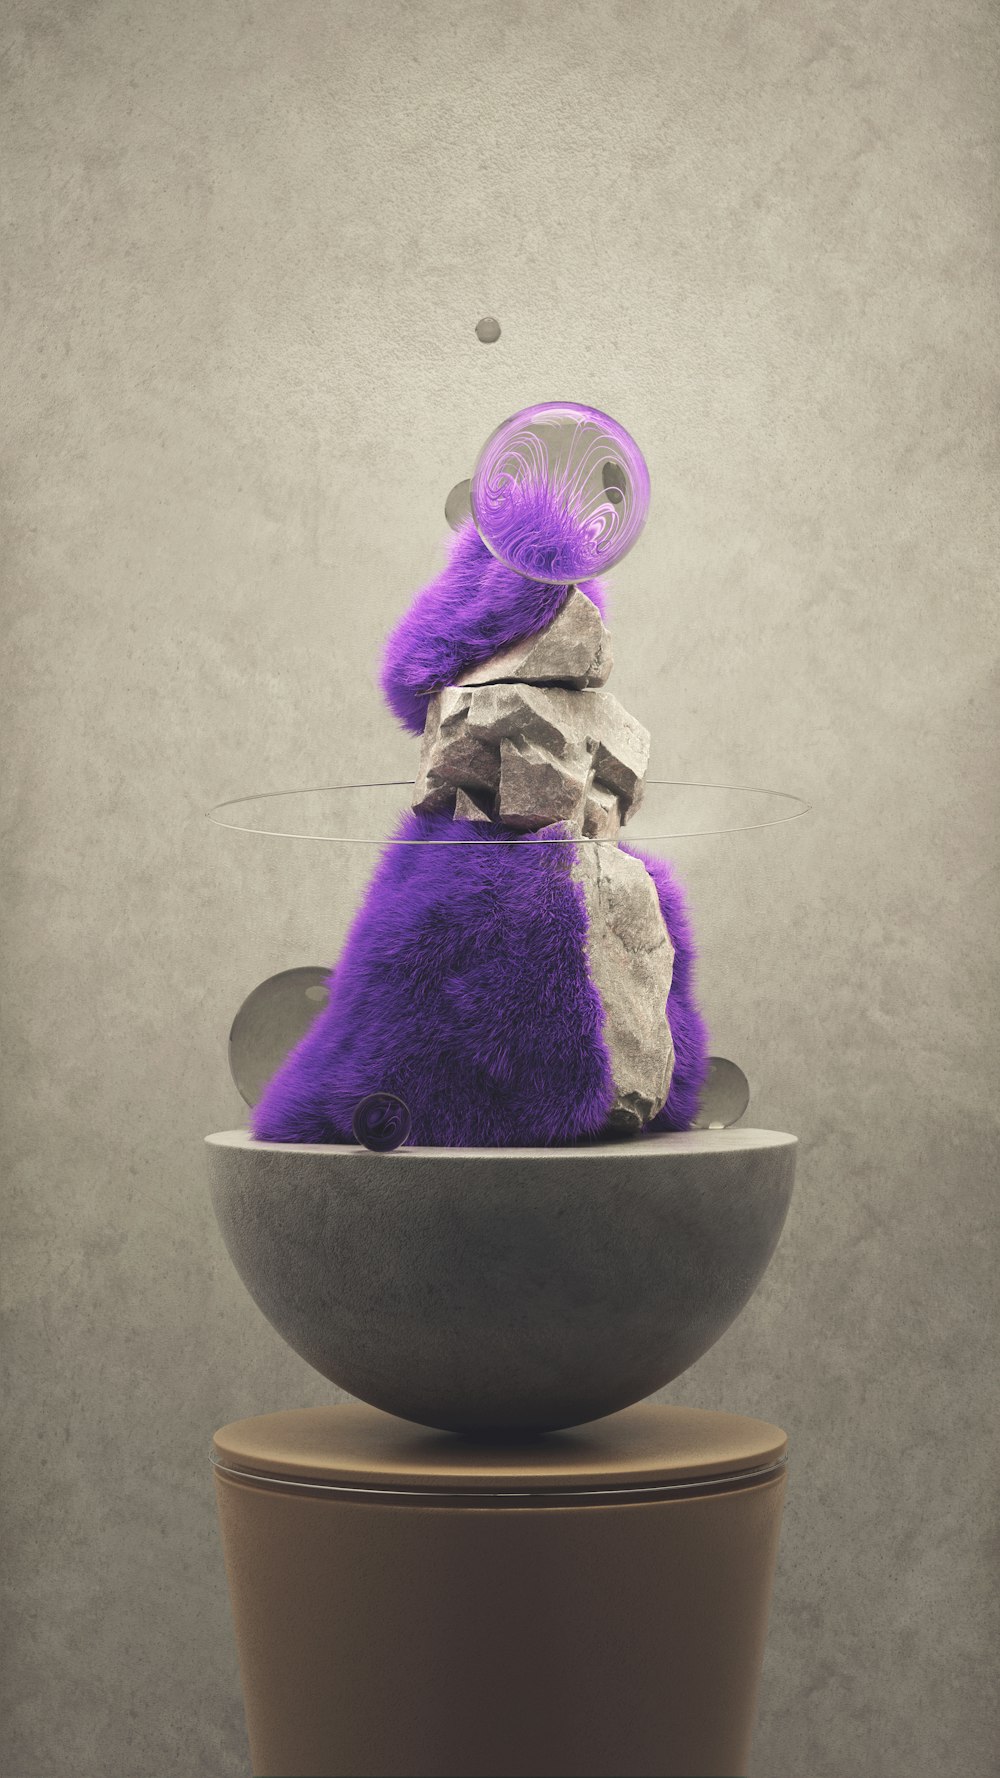 a purple stuffed animal sitting in a bowl